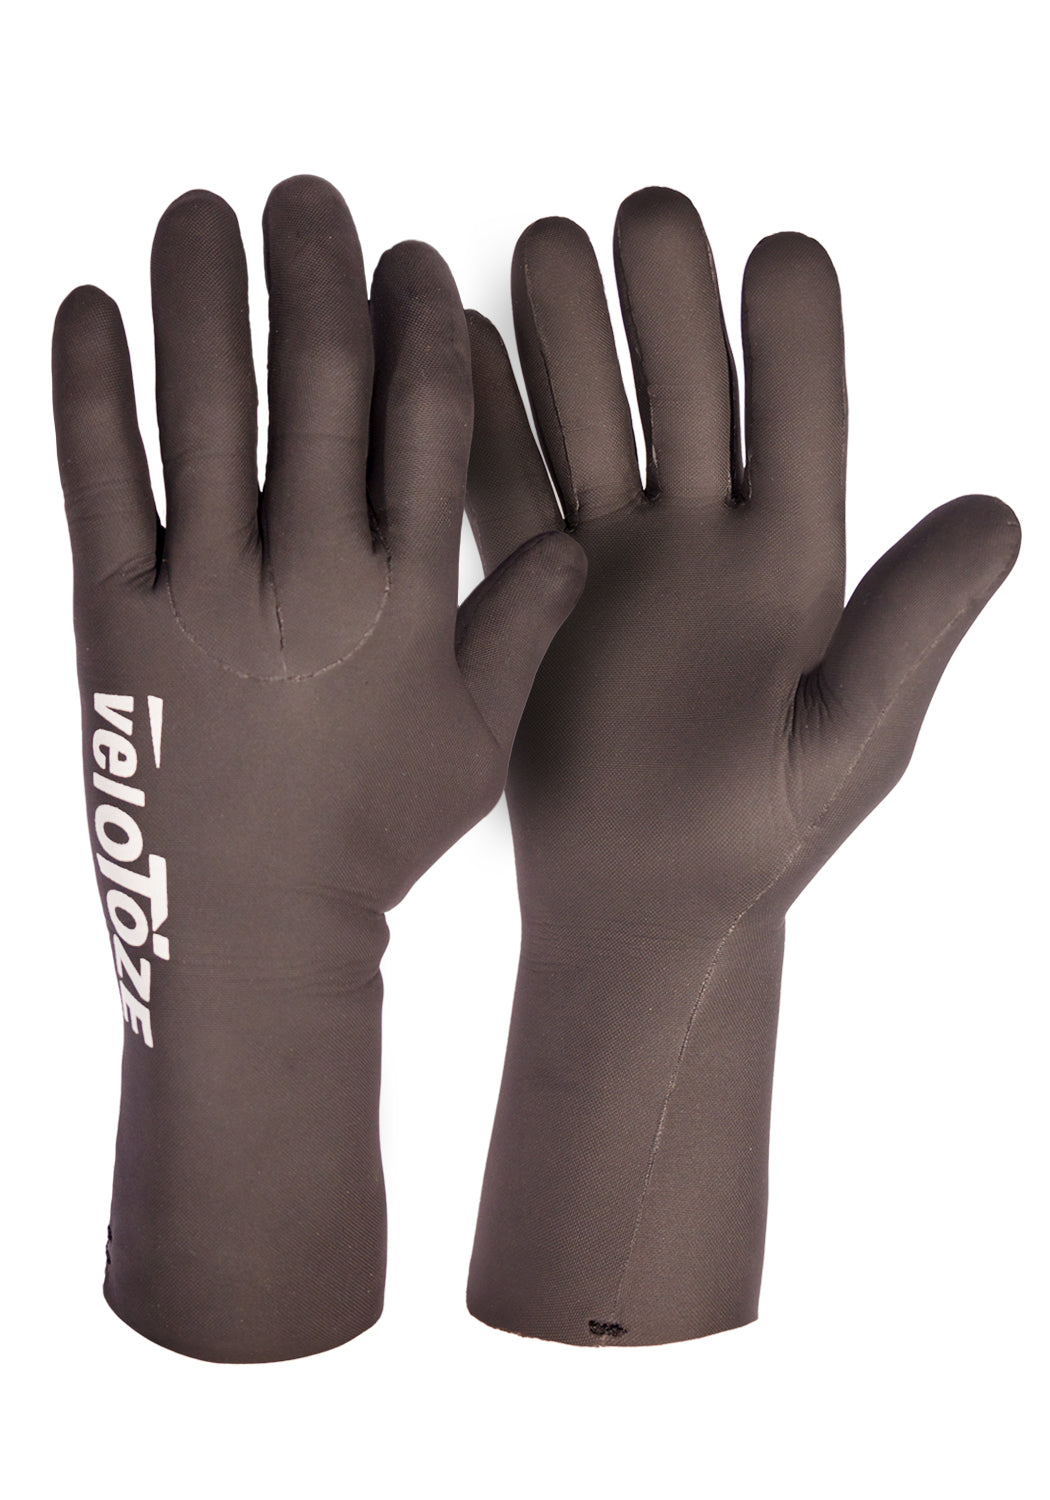 VeloToze Waterproof Cycling Gloves XL Black